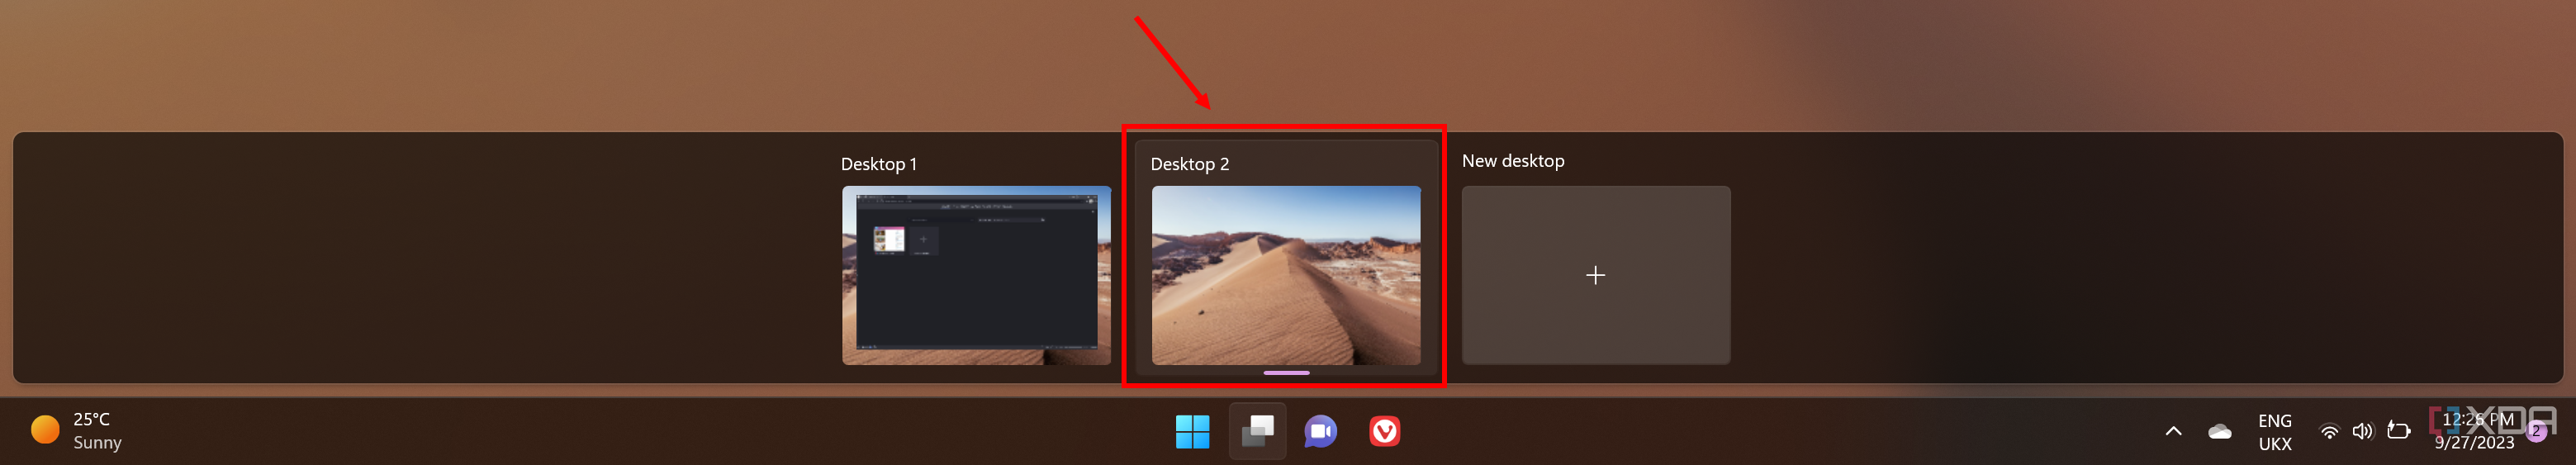 Screenshot of virtual desktops in Windows 11 with a second desktop highlighted